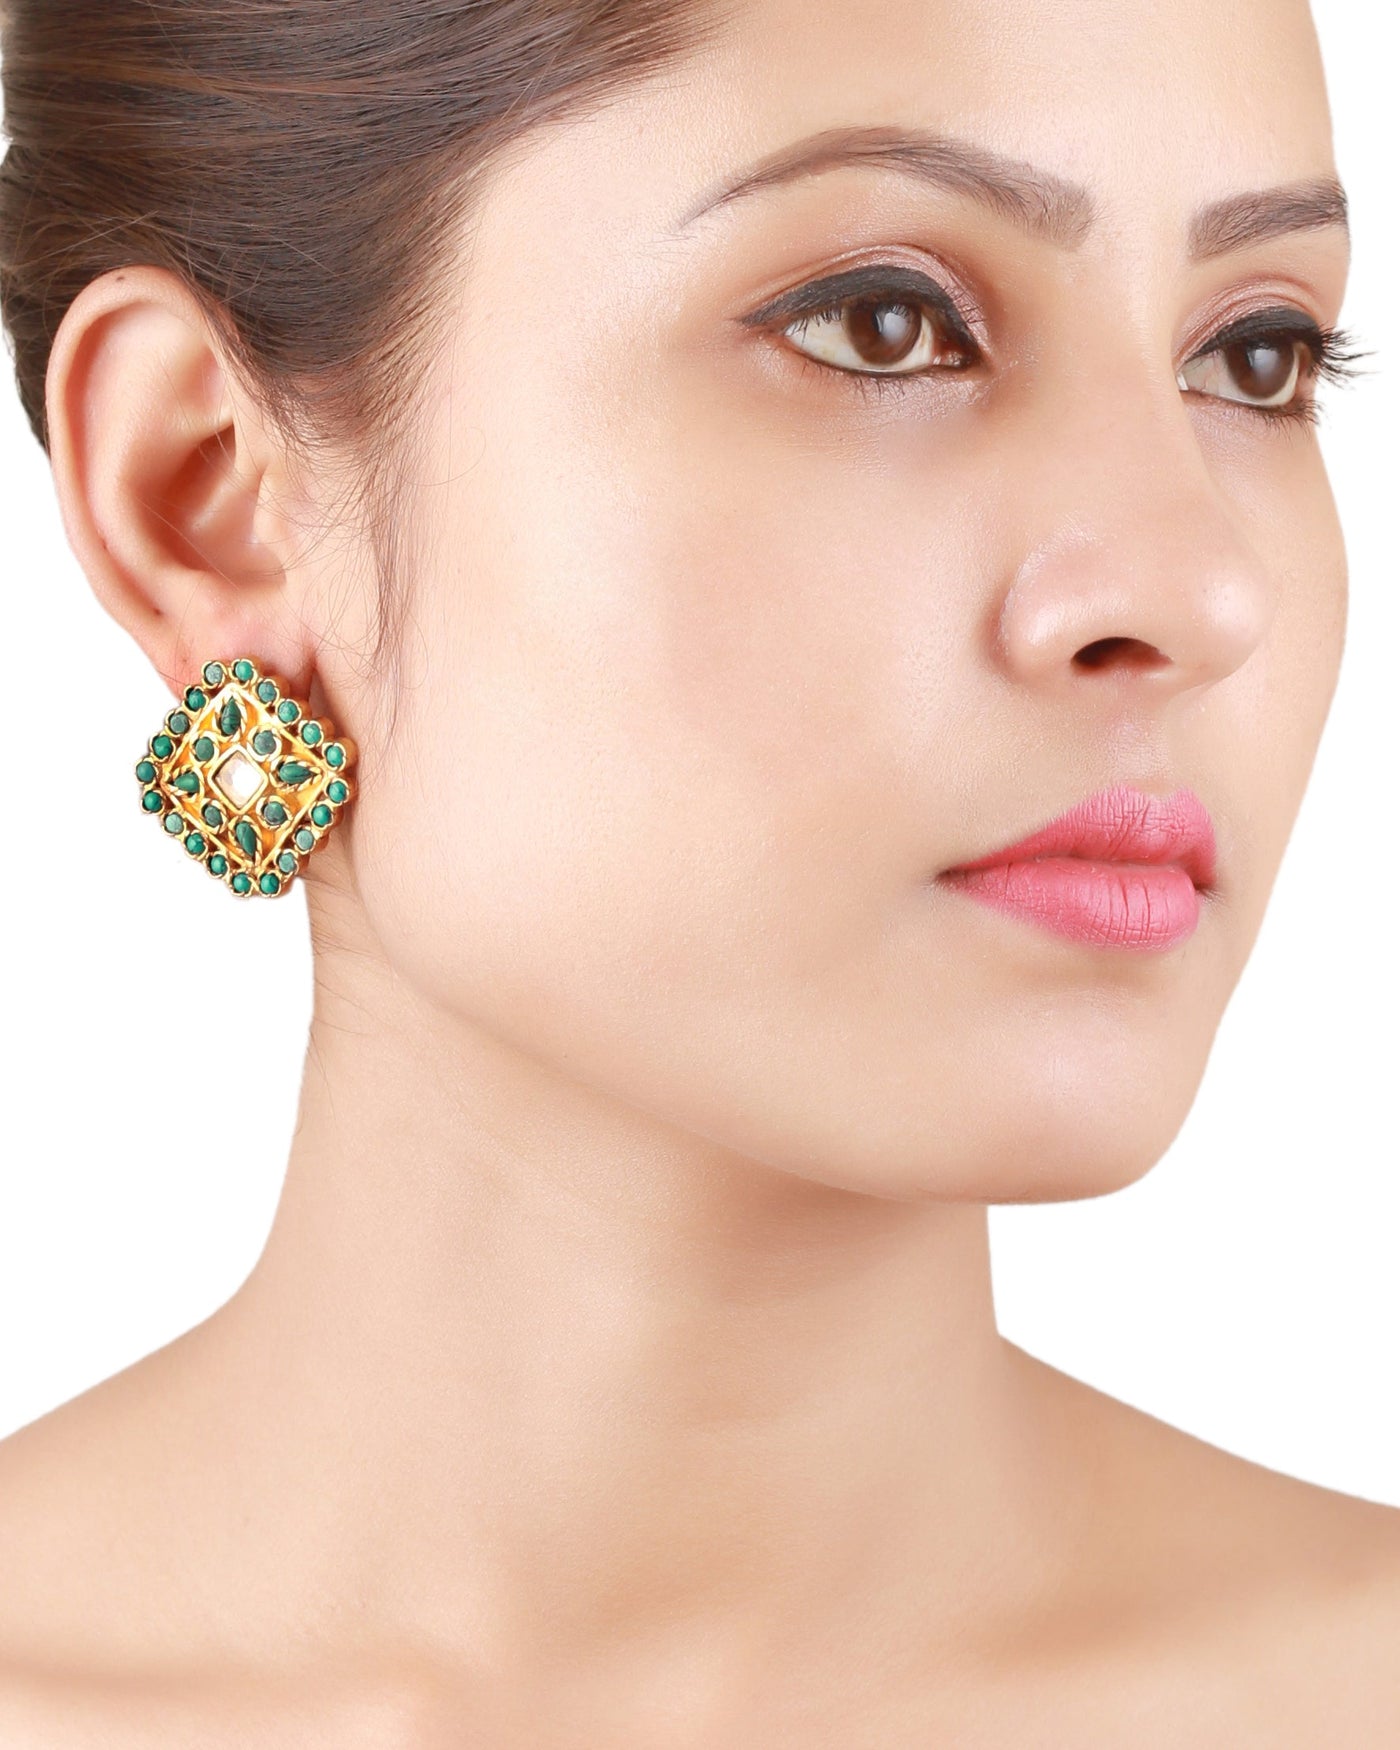 Sangeeta Boochra Earrings-Earrings-Sangeeta Boochra